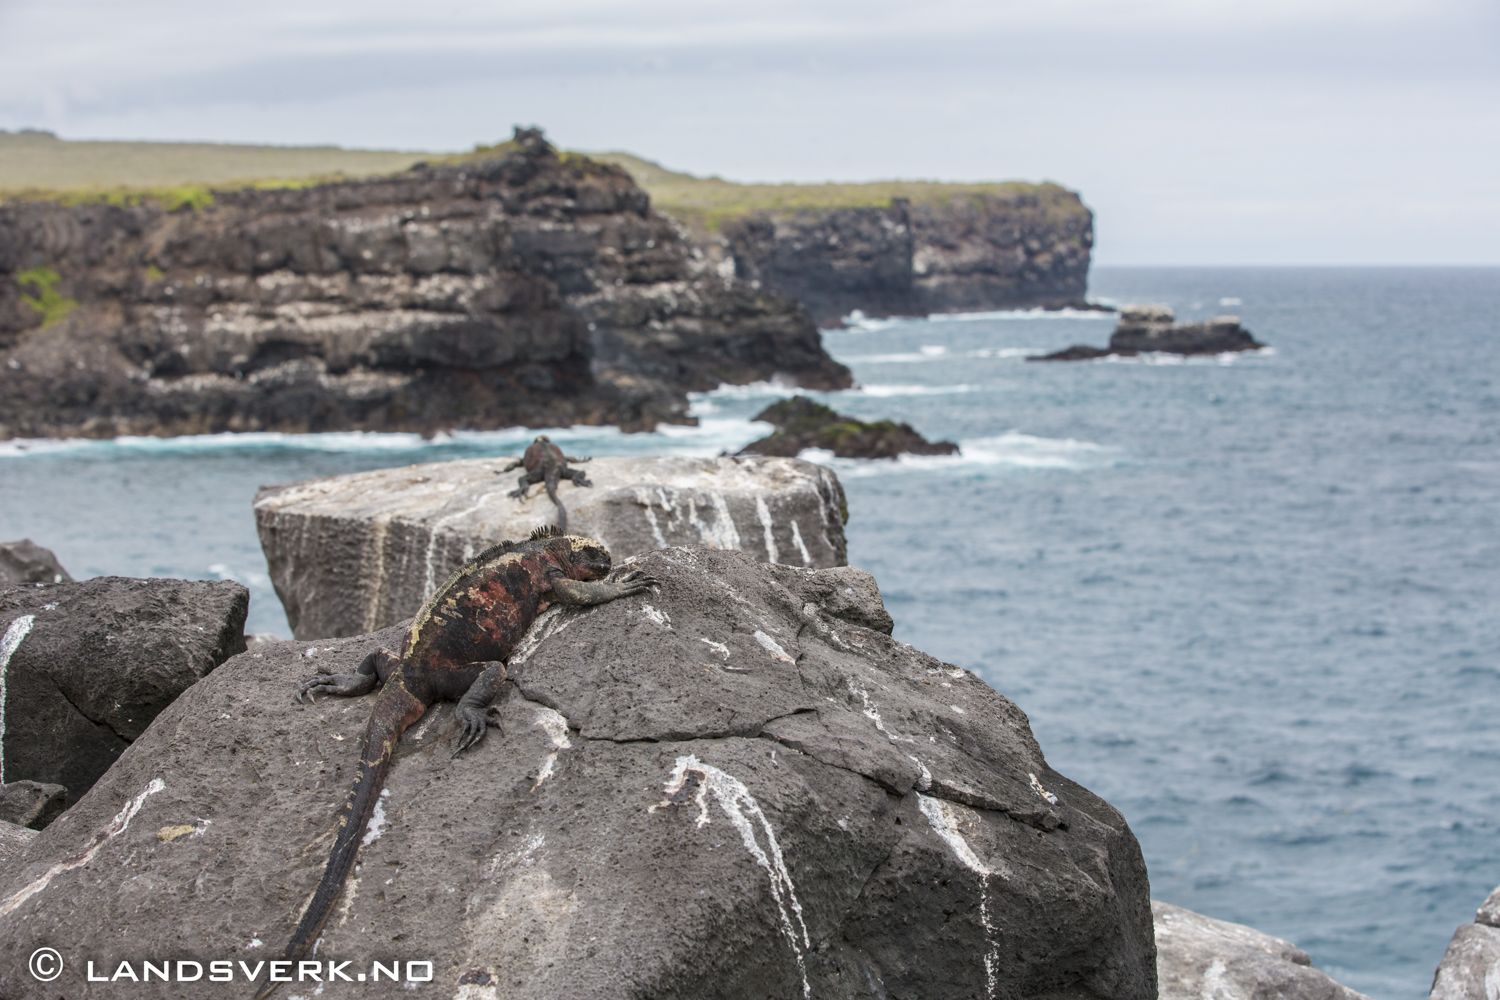 Wild Iguanas, Punta Suarez, Isla Espanola, Galapagos. 

(Canon EOS 5D Mark III / Canon EF 70-200mm f/2.8 L IS II USM)